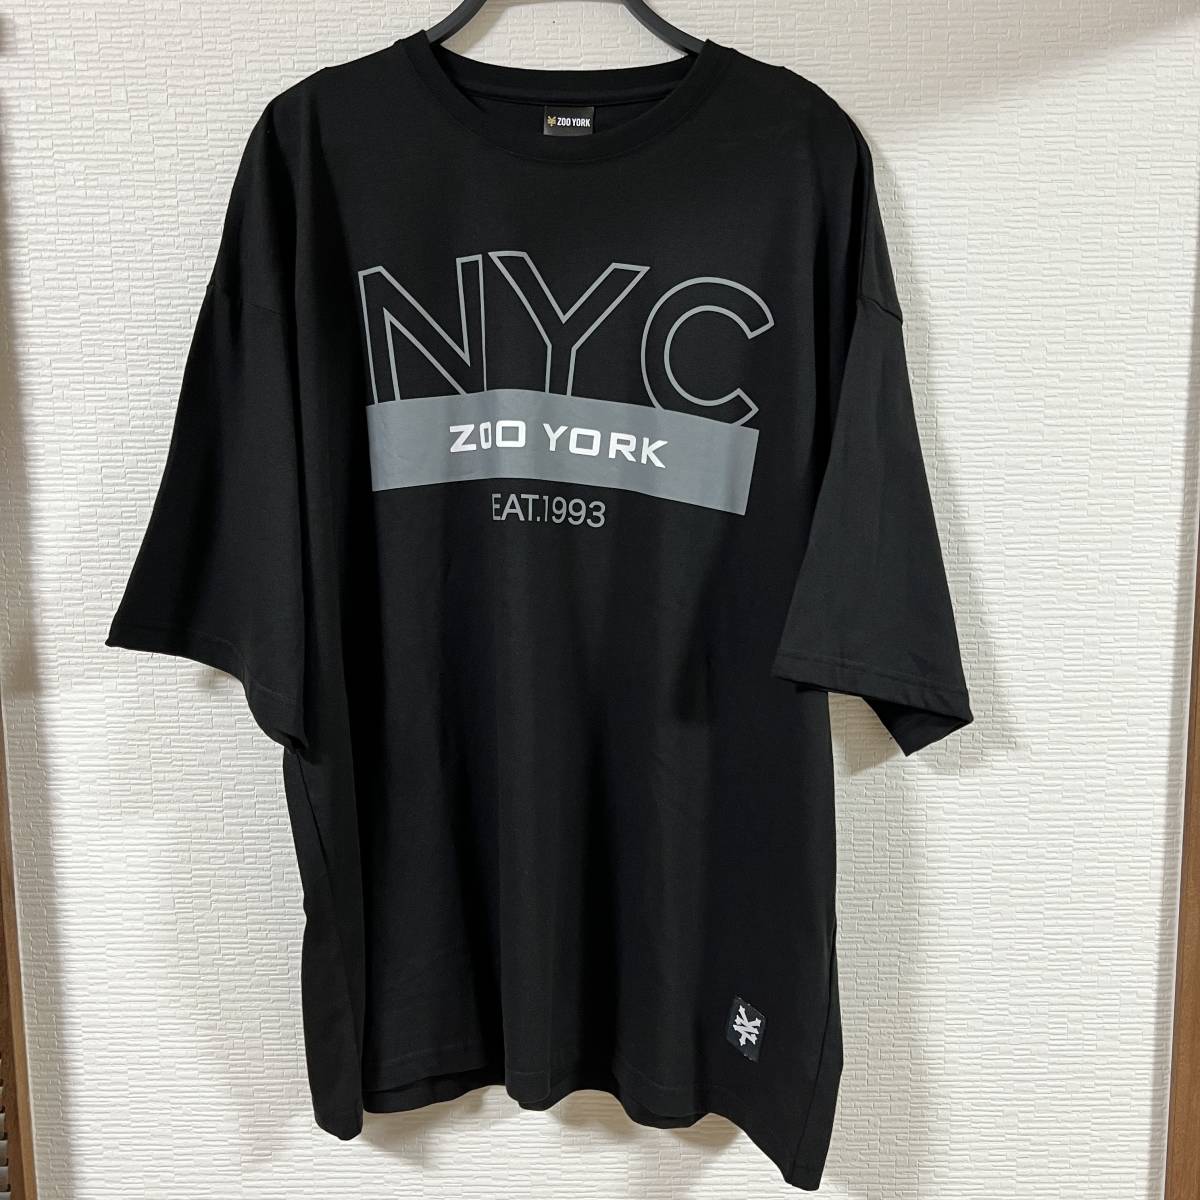 ZOO YORK (ズーヨーク) - MEN 半袖Tシャツ ロゴTシャツ NYC ブランドTシャツ ストリートファッション LLサイズ 黒 (タグ付き新品未使用品)_画像1